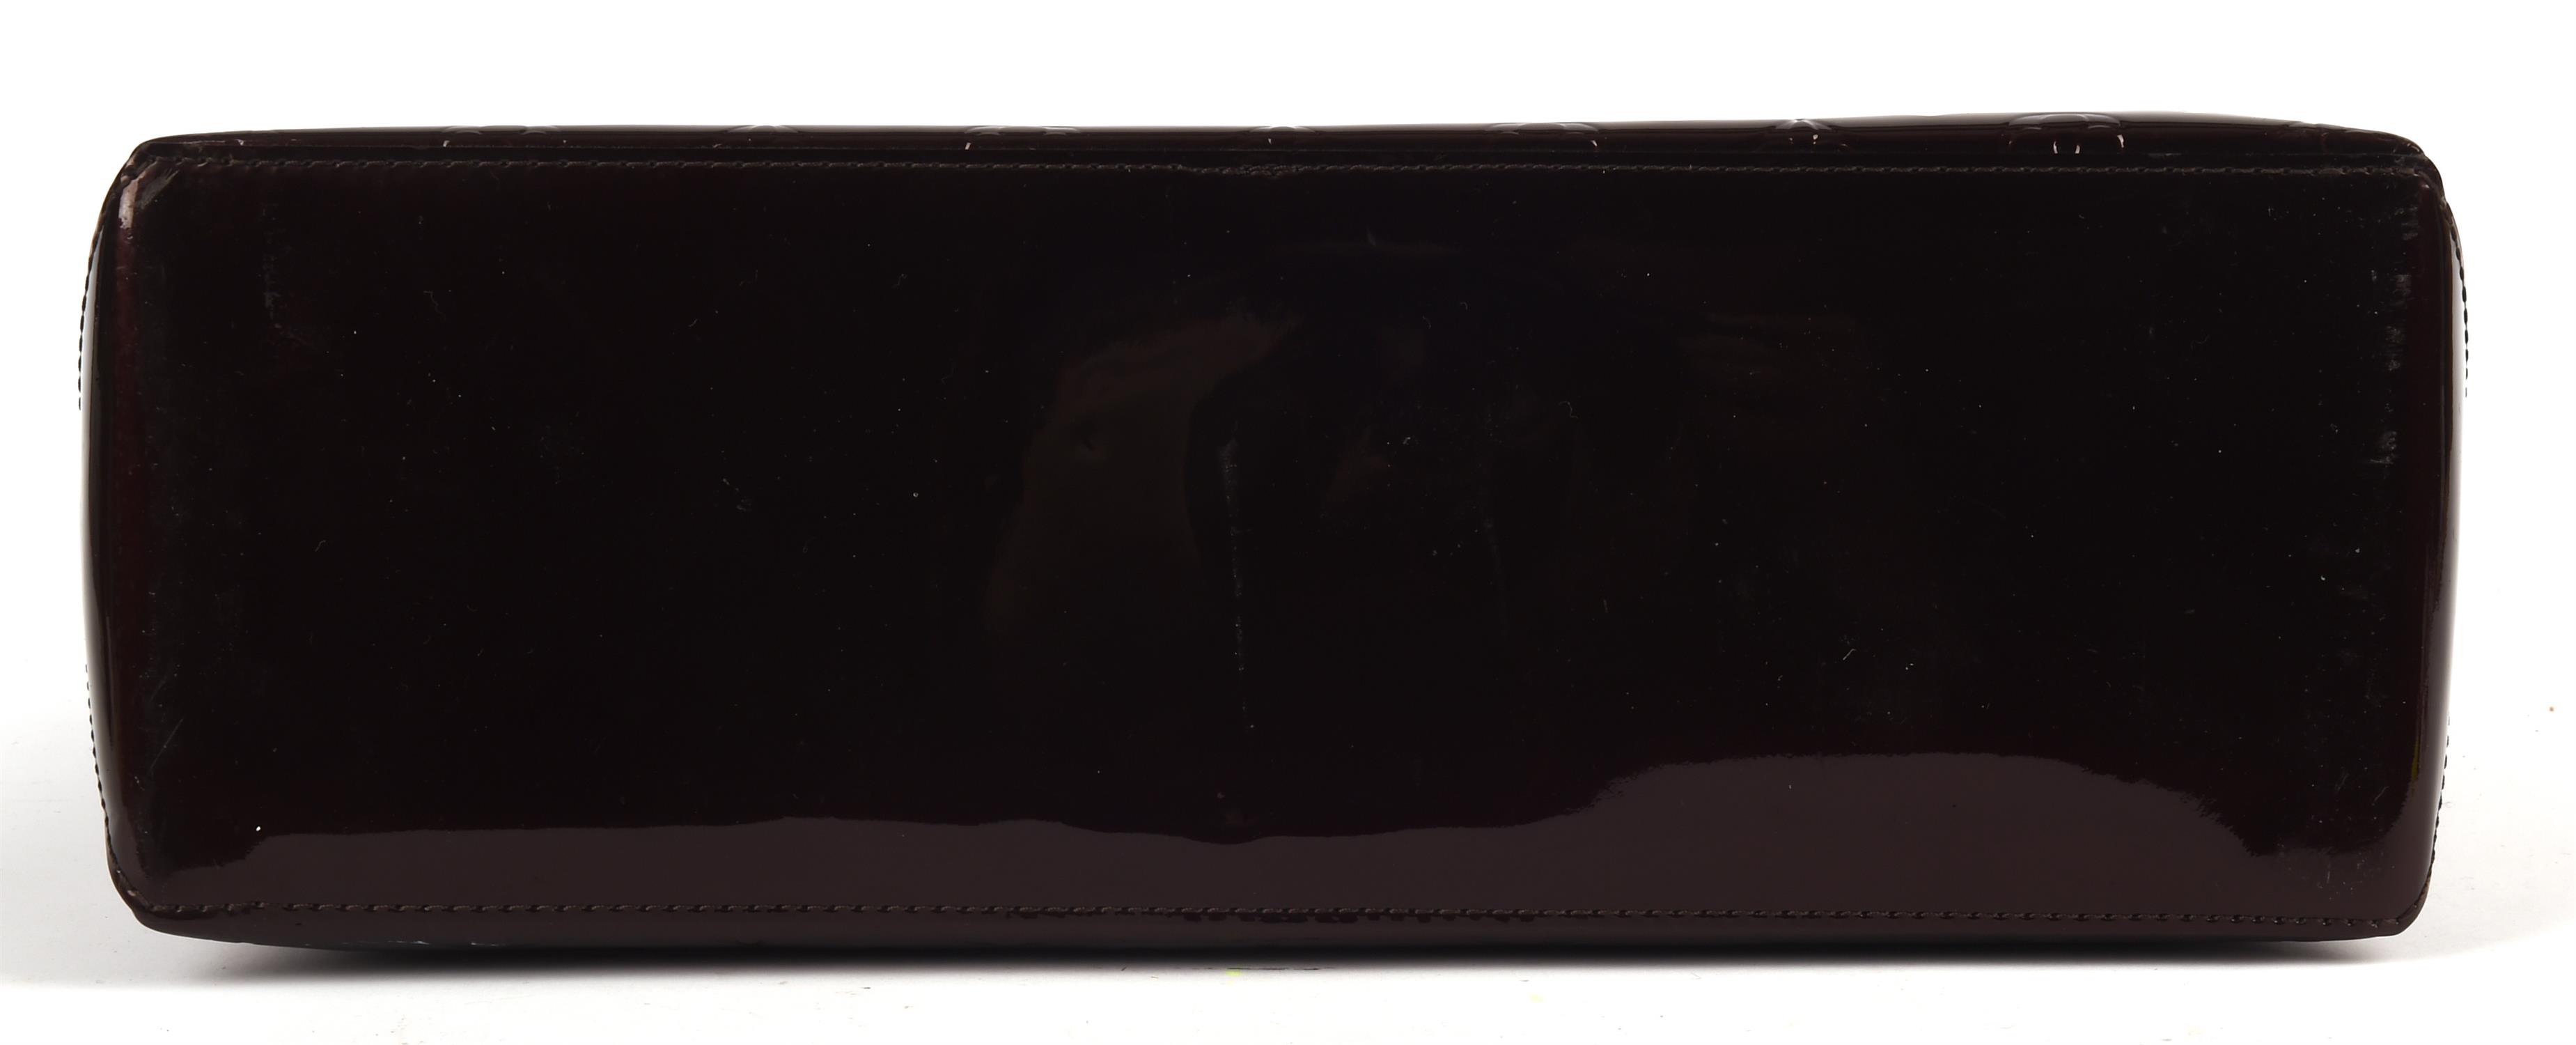 LOUIS VUITTON Burgundy Wilshire monogram Vernis varnished calf leather handbag (36cm x 27cm x 12cm) - Image 6 of 6